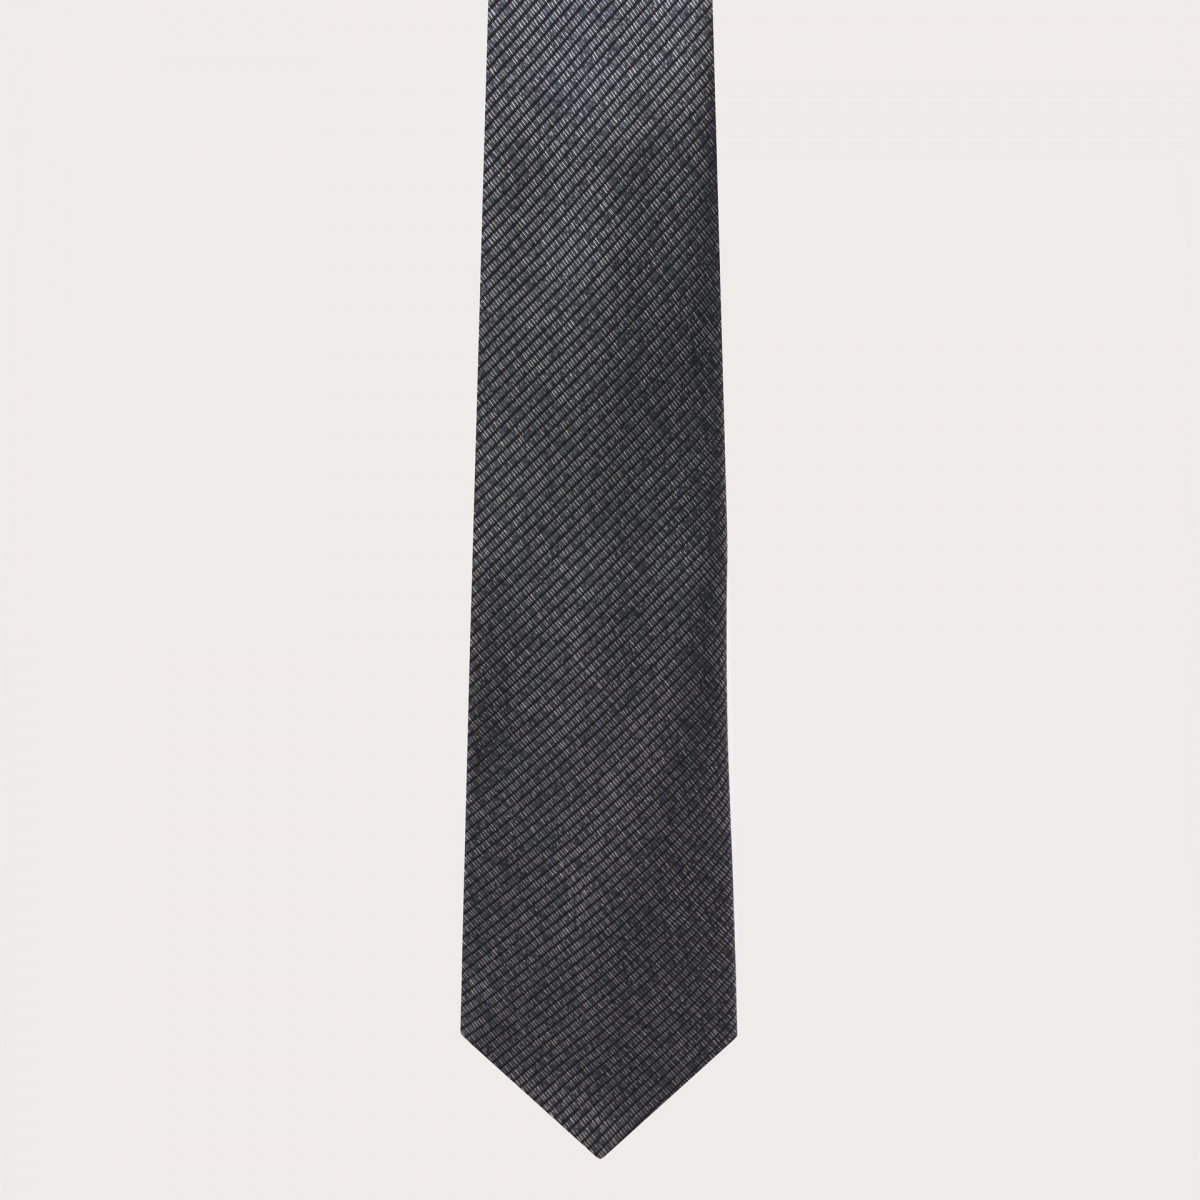 BRUCLE Men's necktie in black and silver melange jacquard silk